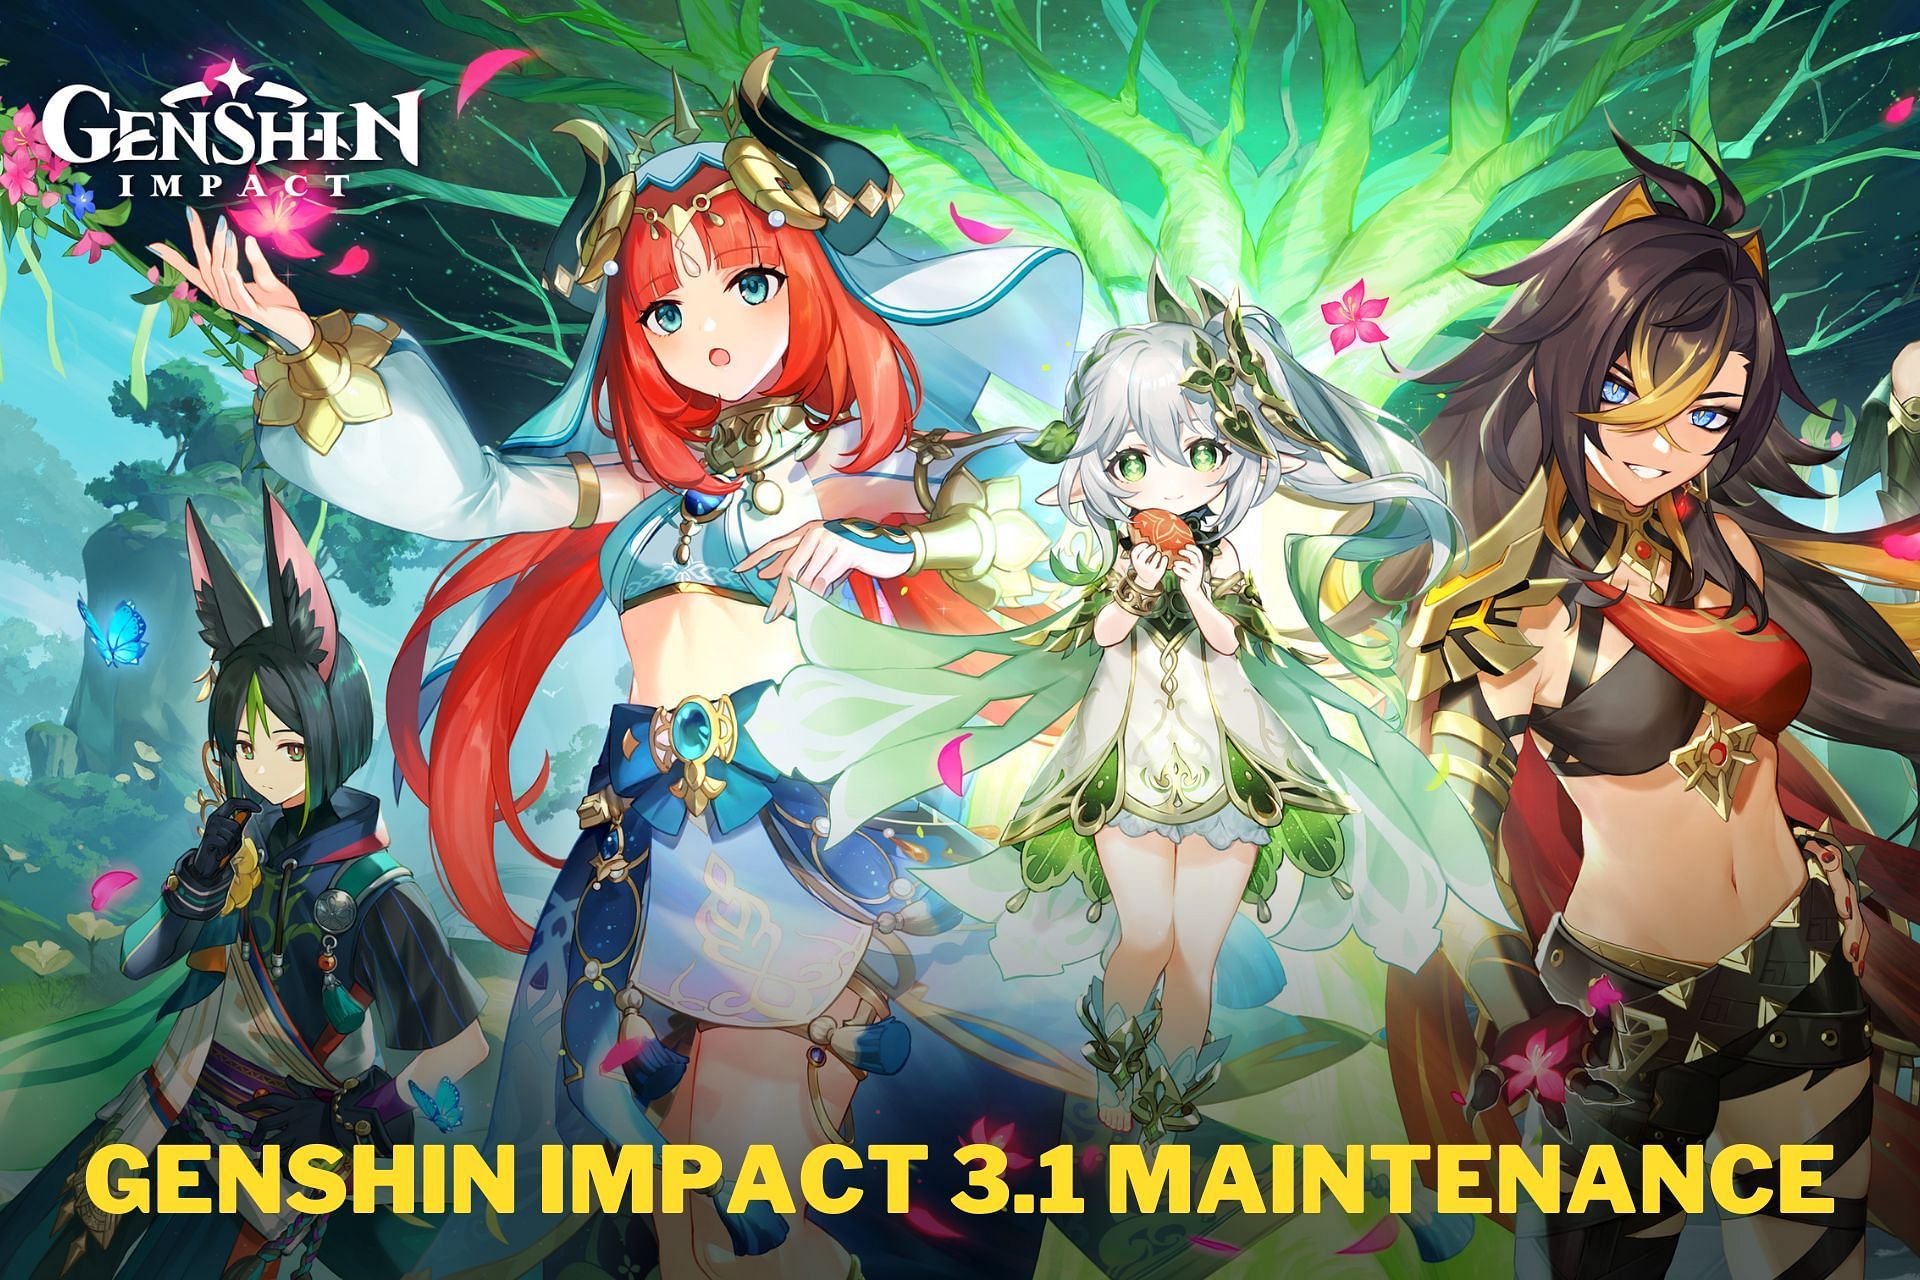 Genshin Impact version 3.1 maintenance is coming closer (Image via HoYoverse)